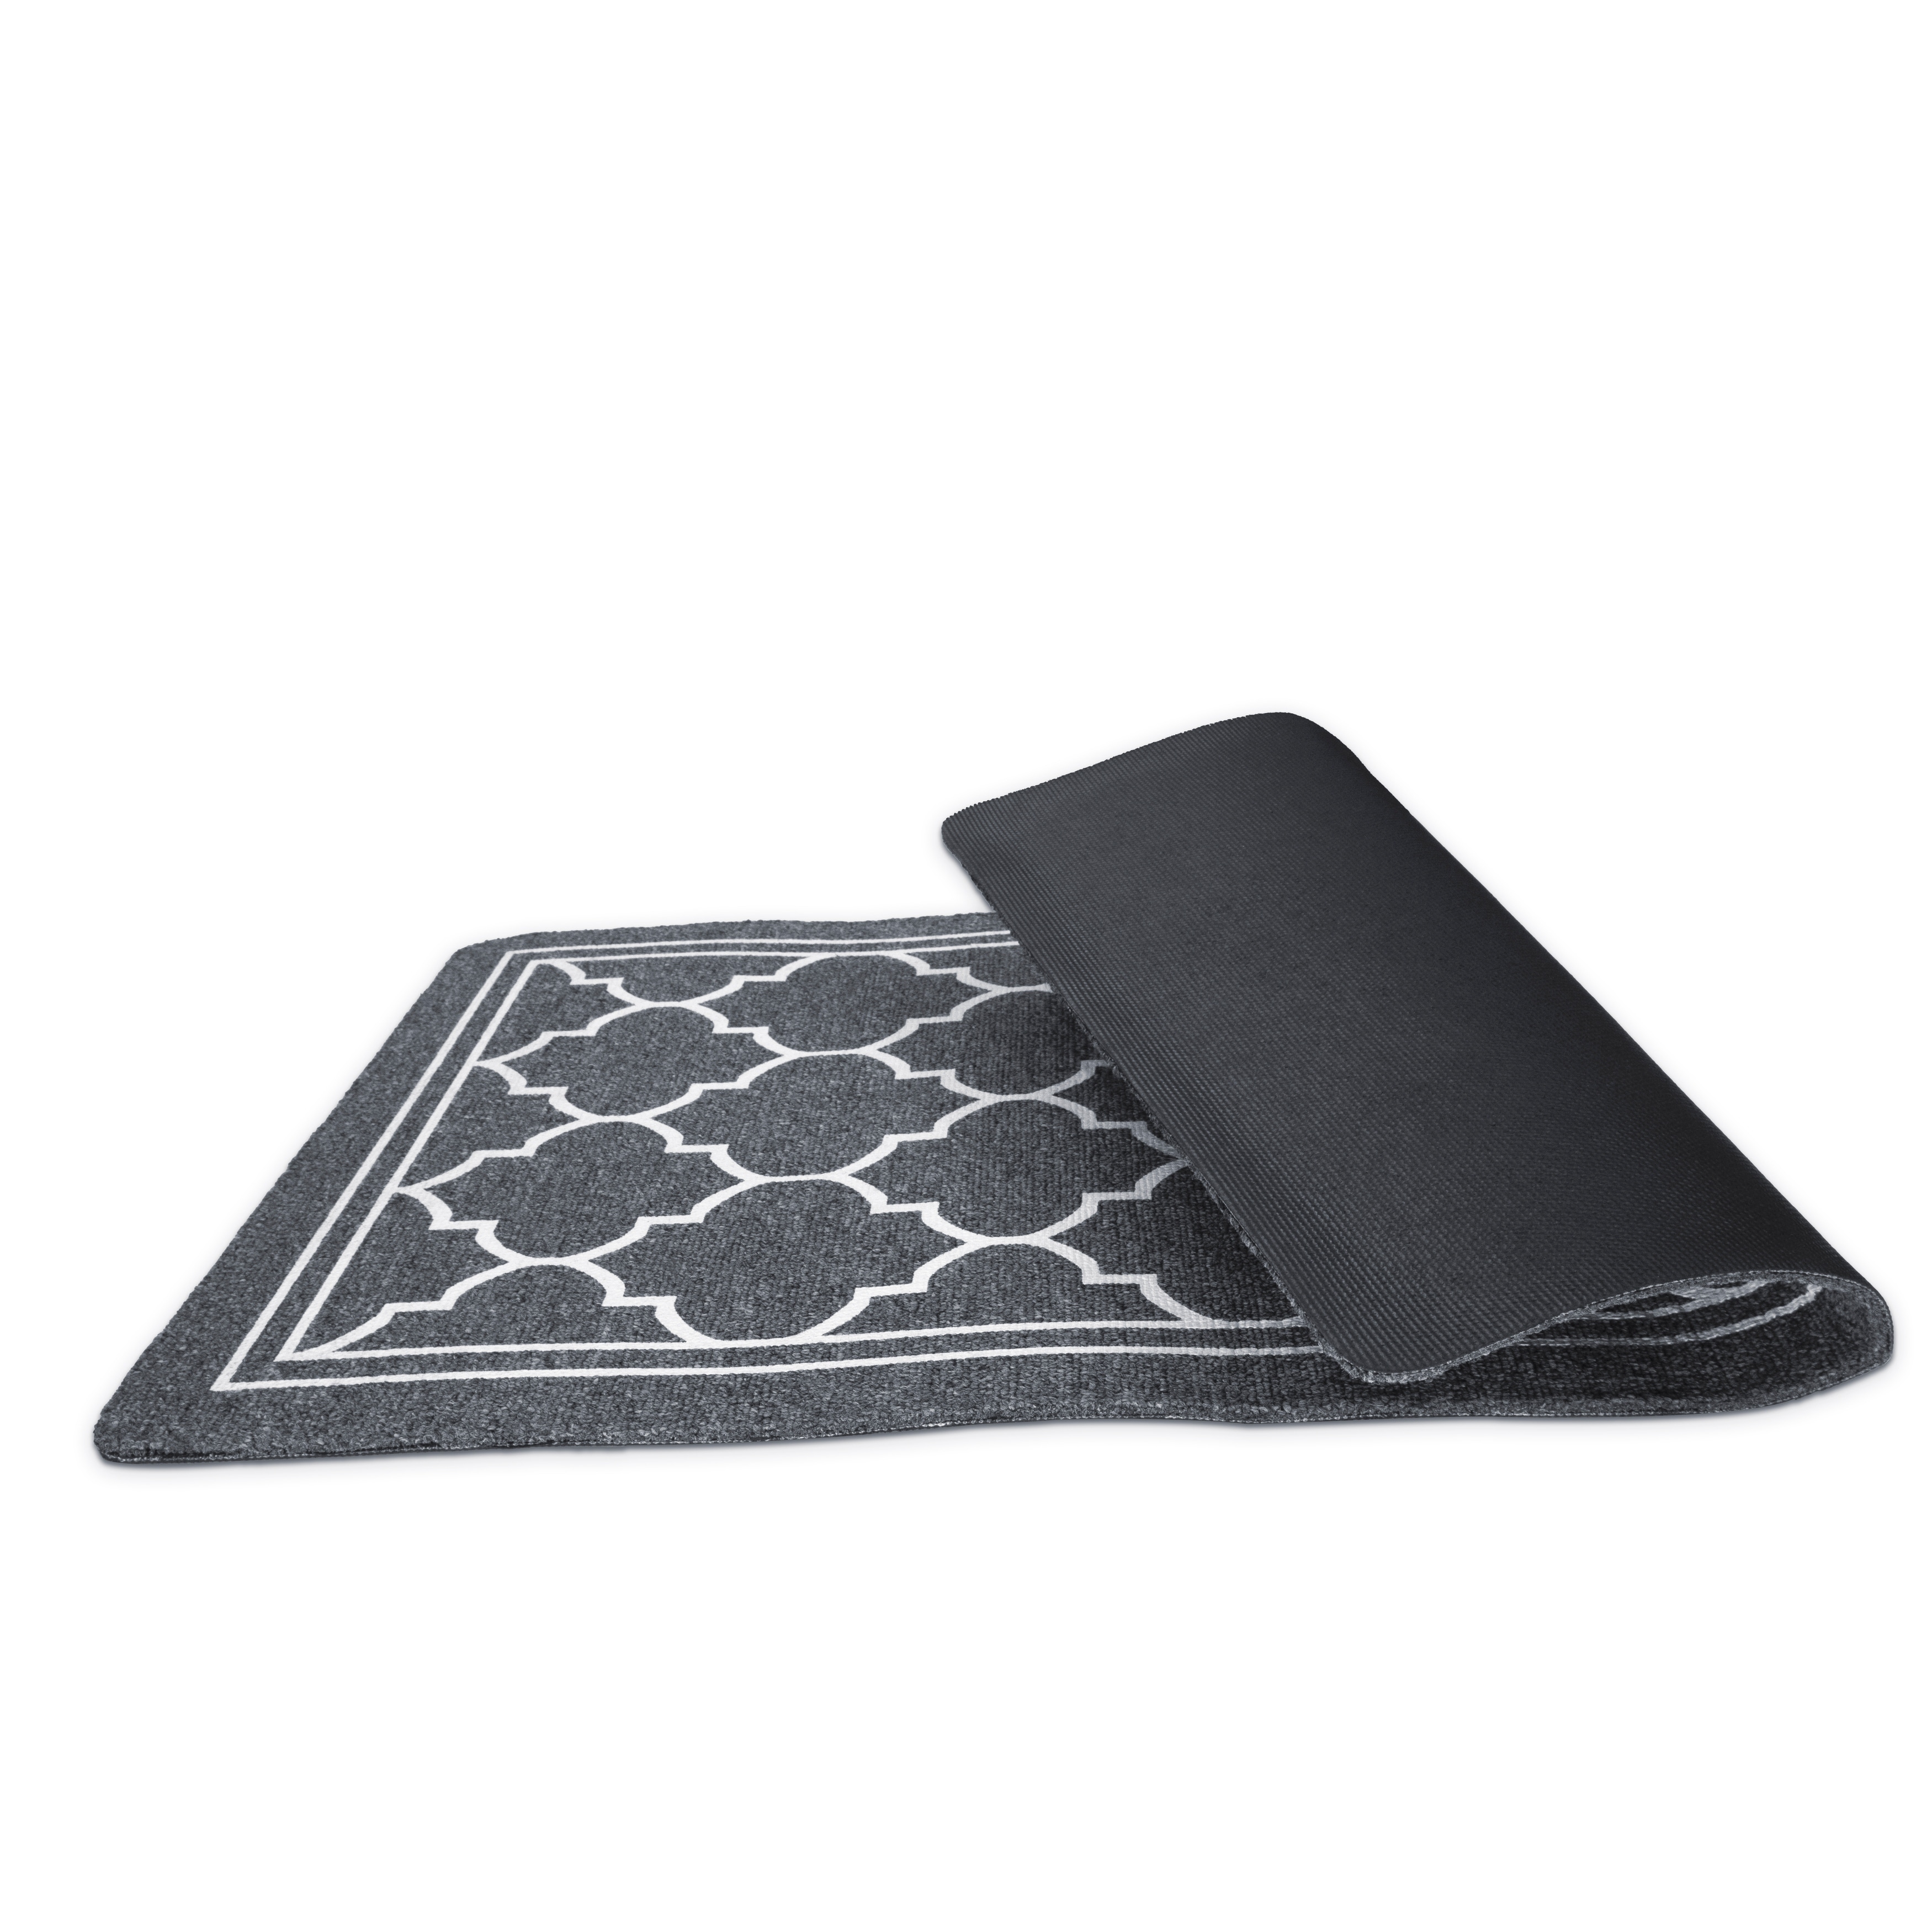 Mascot Hardware Relax Letter Printed Non-Slip Doormats for Indoor and Outdoor, Grey